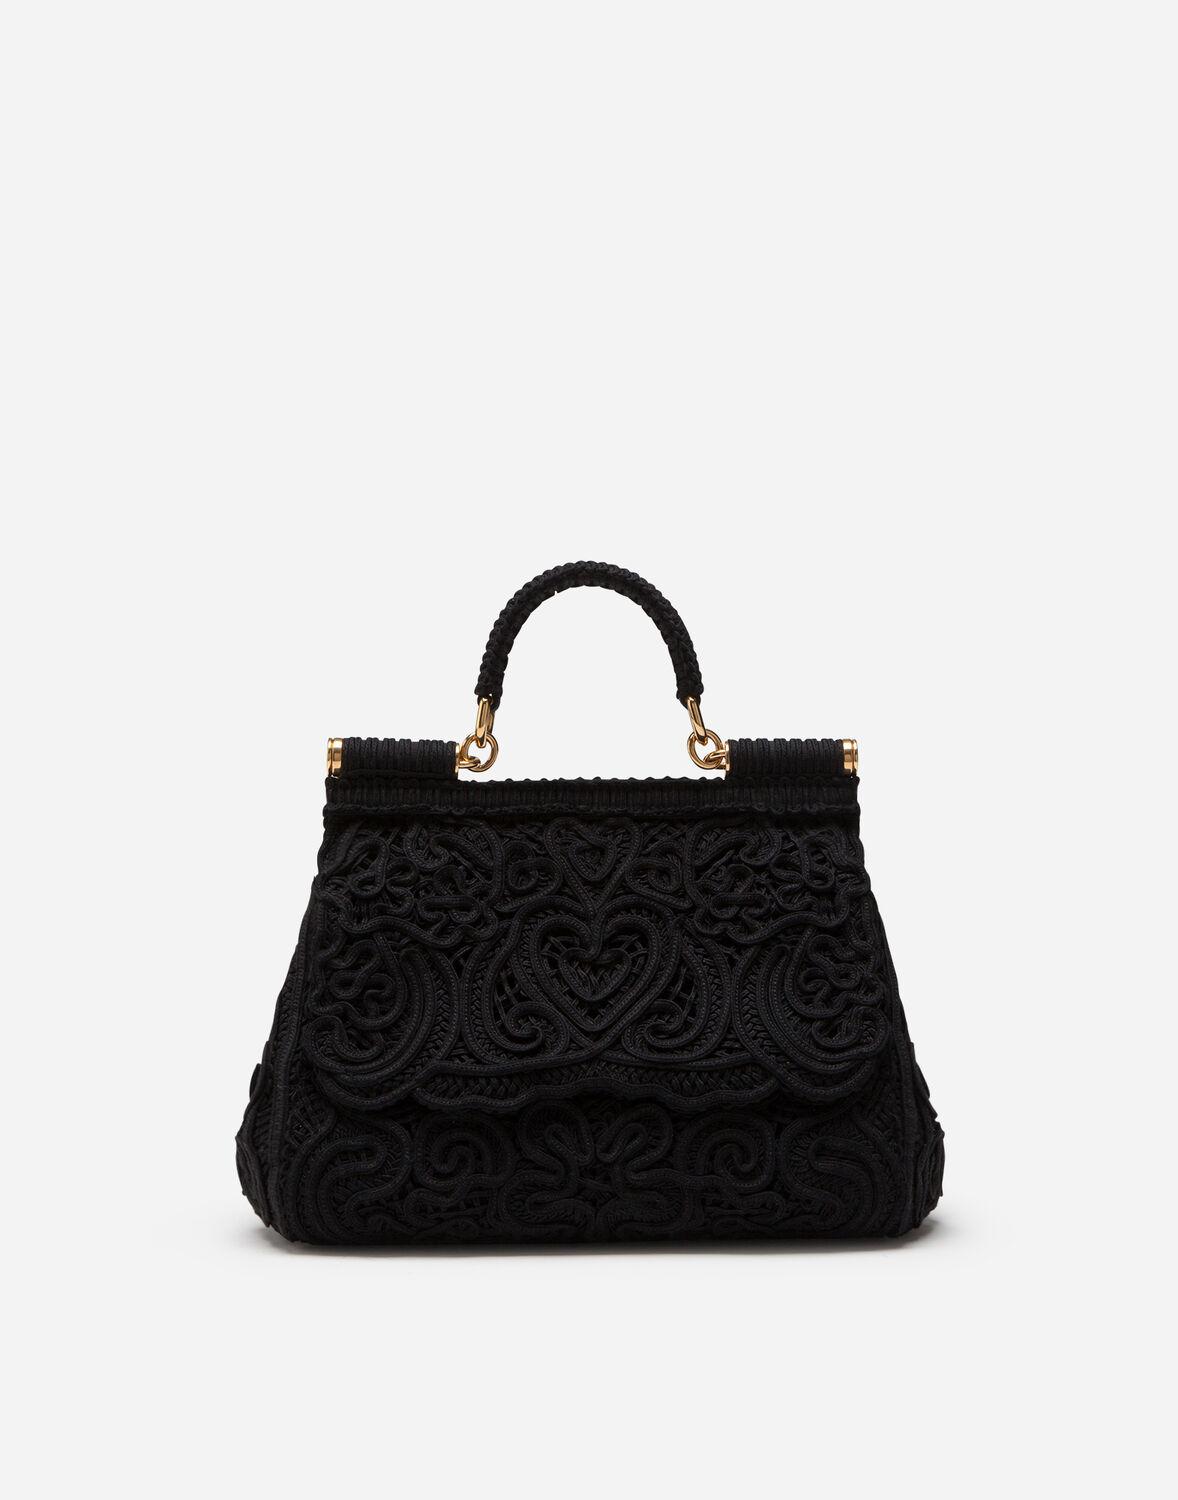 Dolce & Gabbana Medium Cordonetto Lace Sicily Bag in Black - Lyst